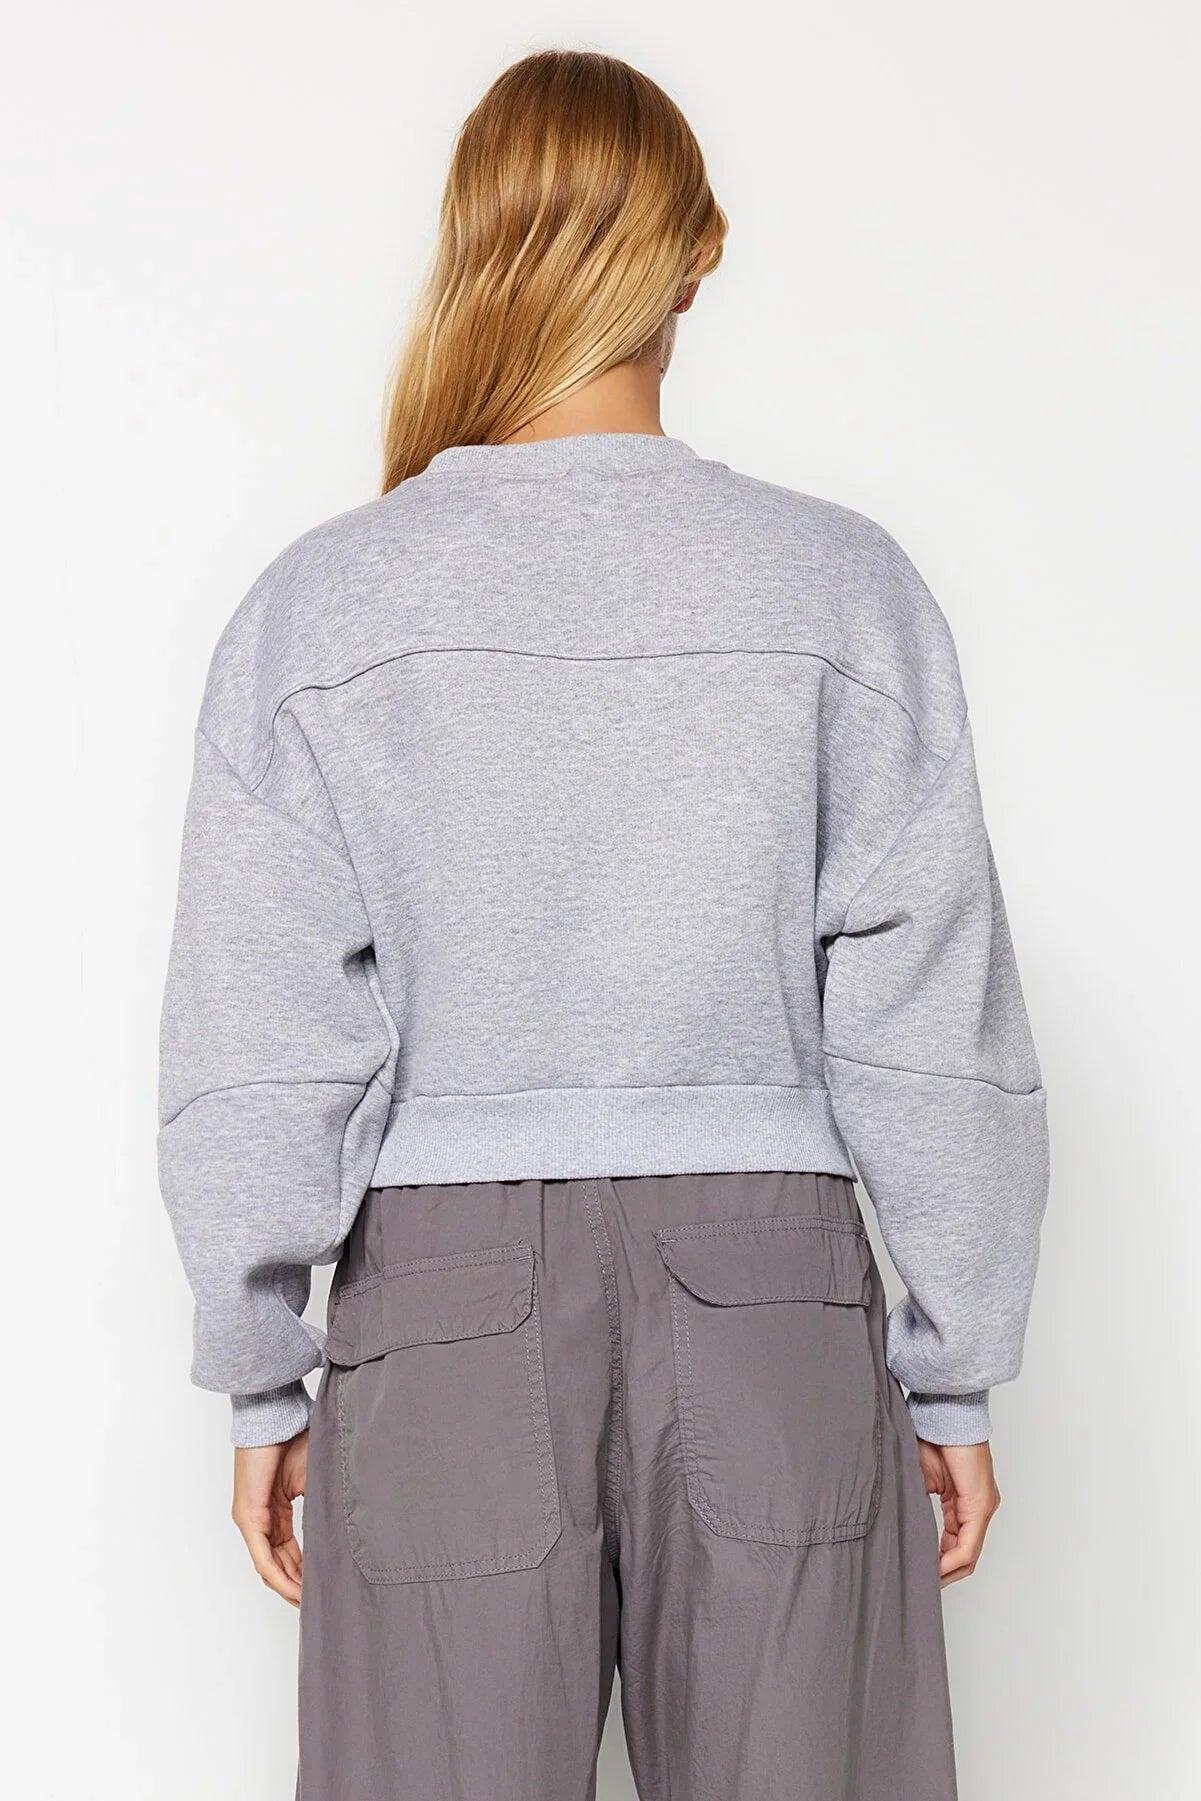 Trendyol Grey Comfy Sweatshirt